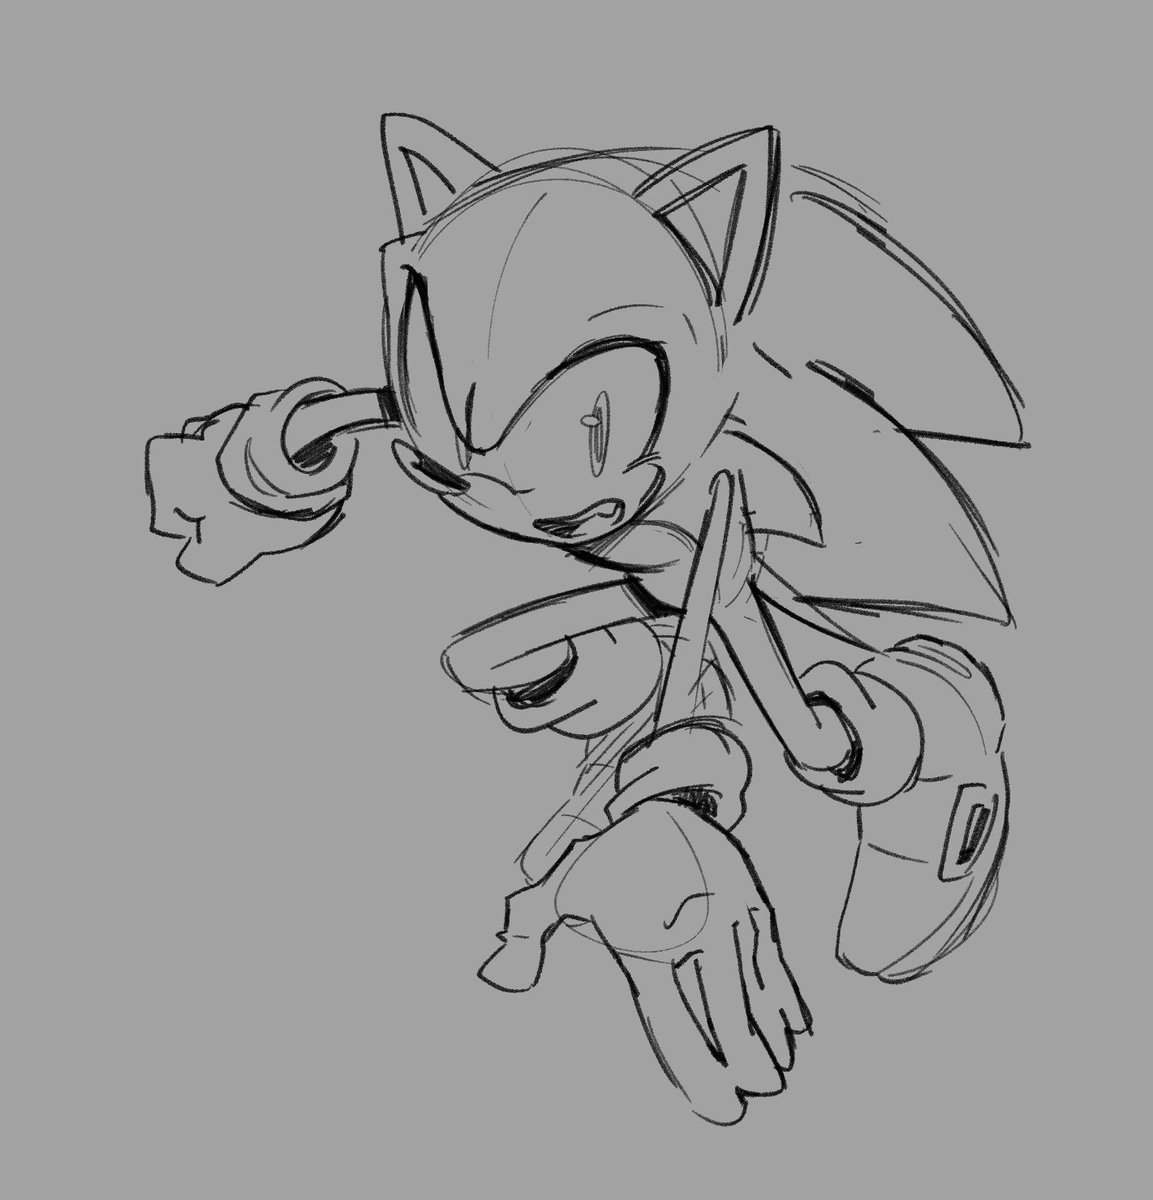 Bad Sonic doodle.